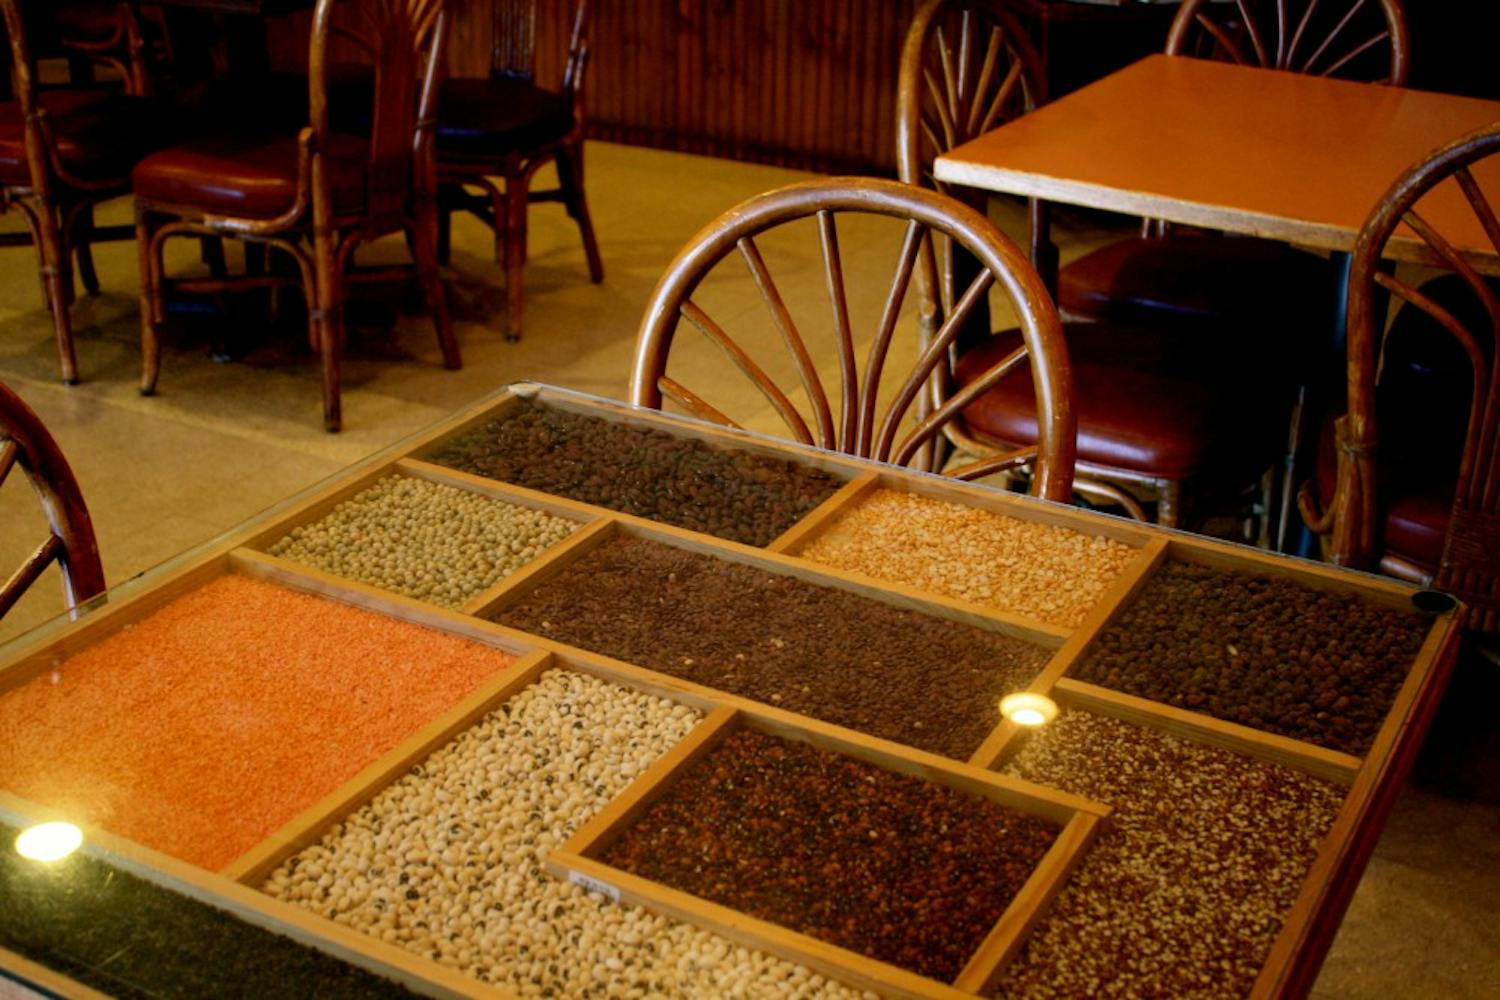 The bean table. Photo by Stephanie Pellicano.